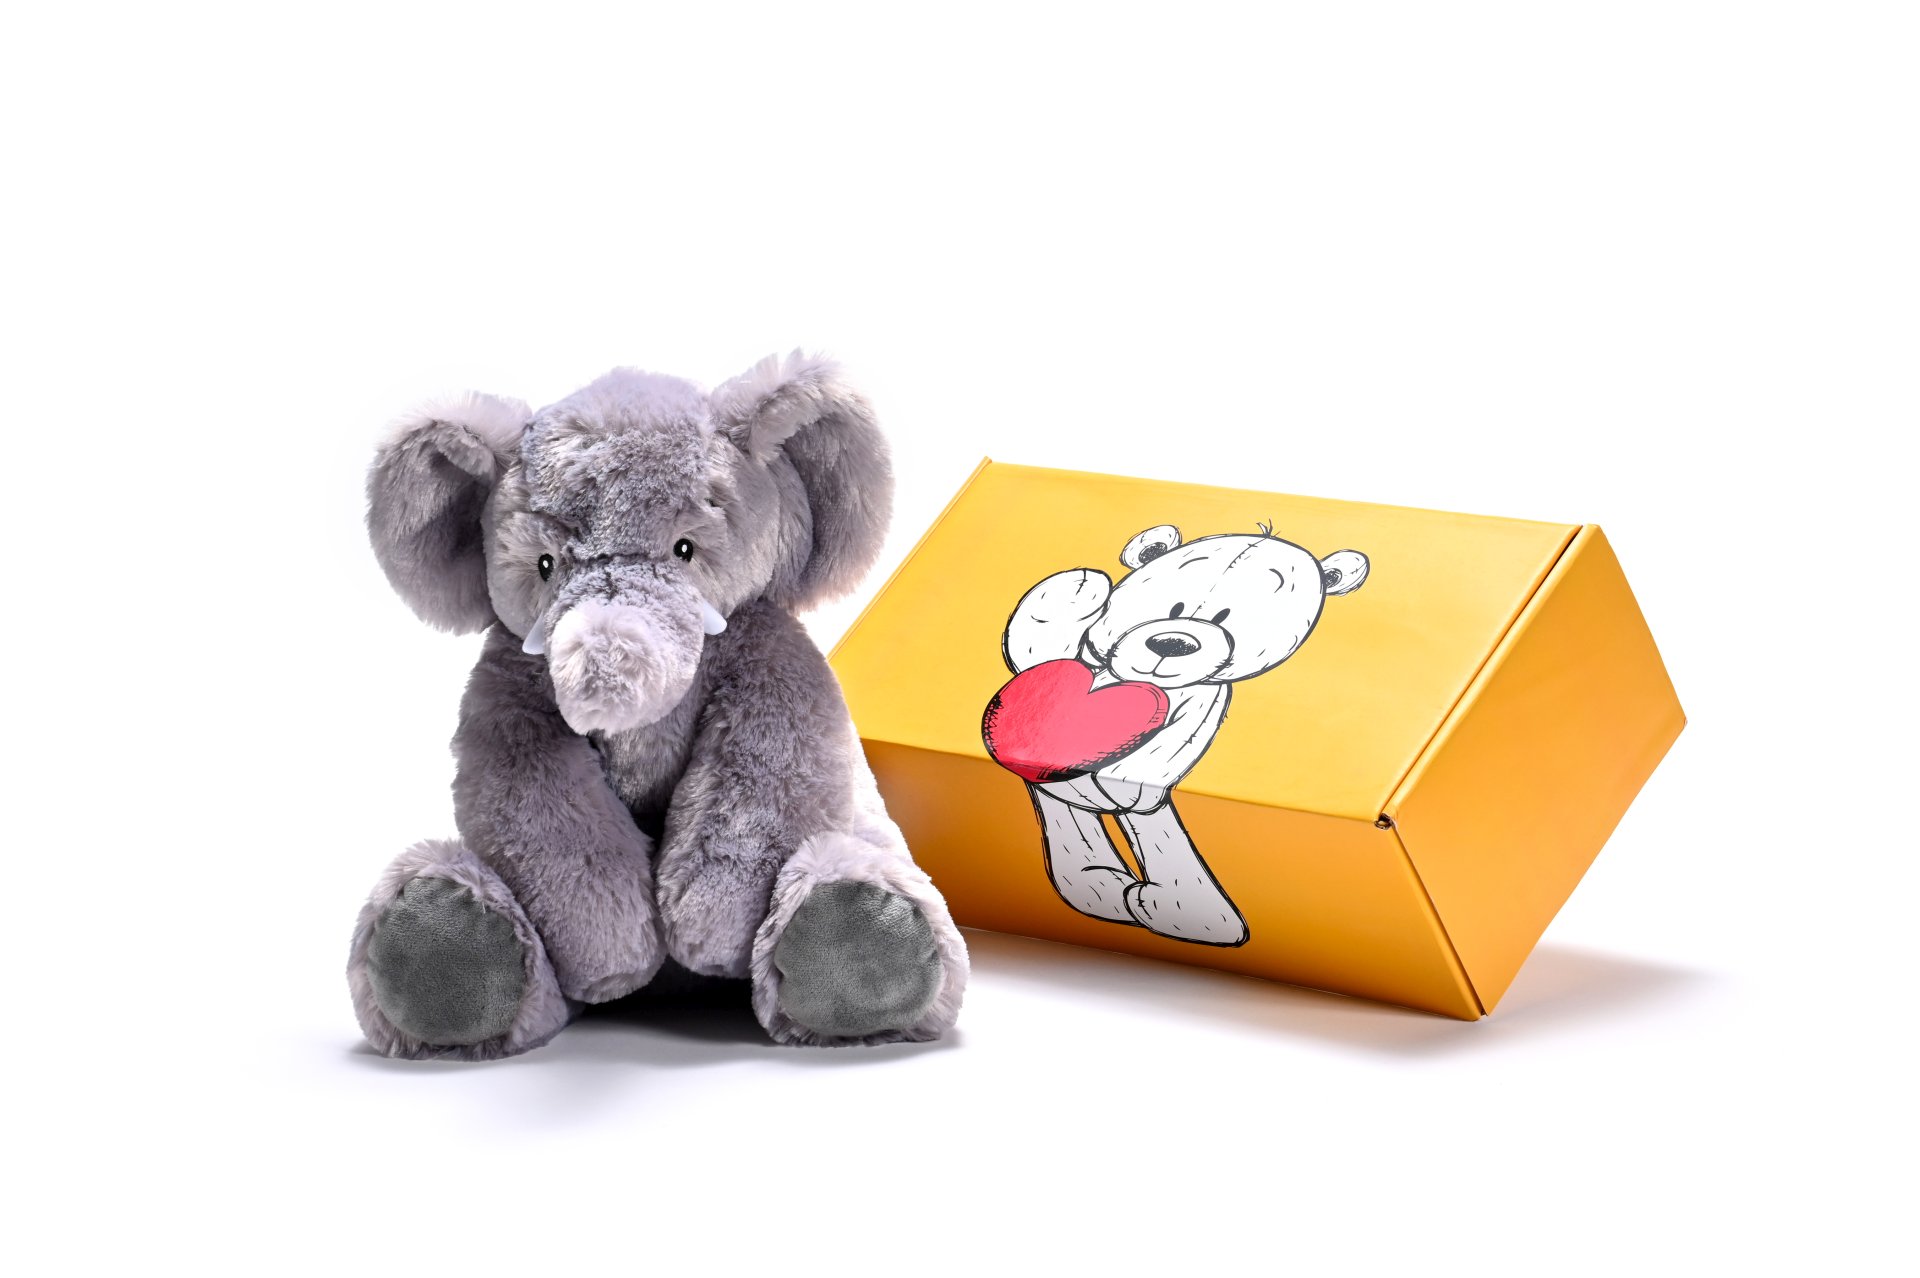 a stuffed elephant toy next to a box